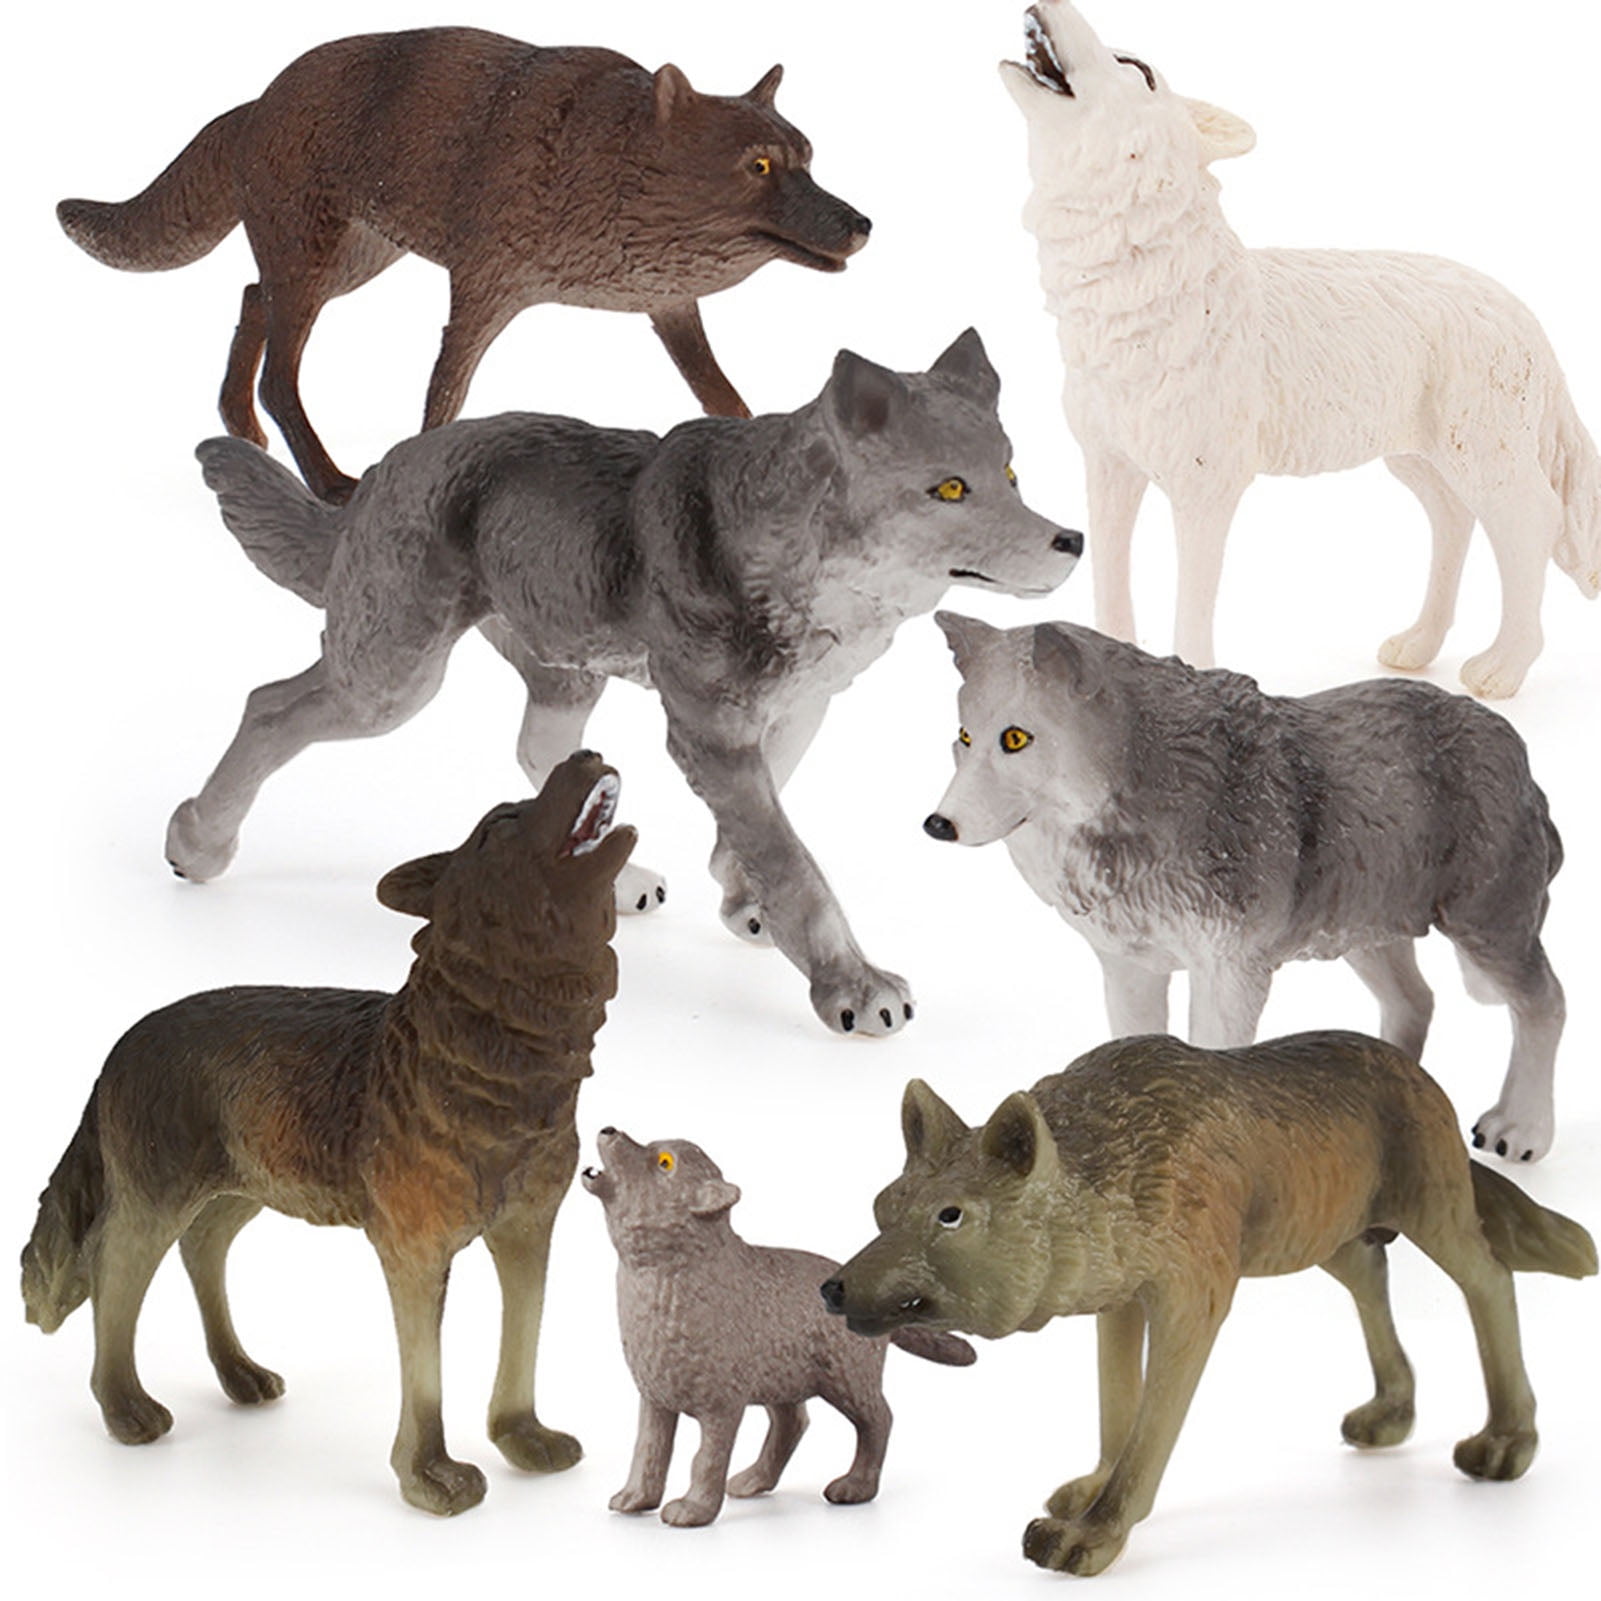 Simulation Plastic Siberian Wolf Animal Model Toy Figures Gift Playset 